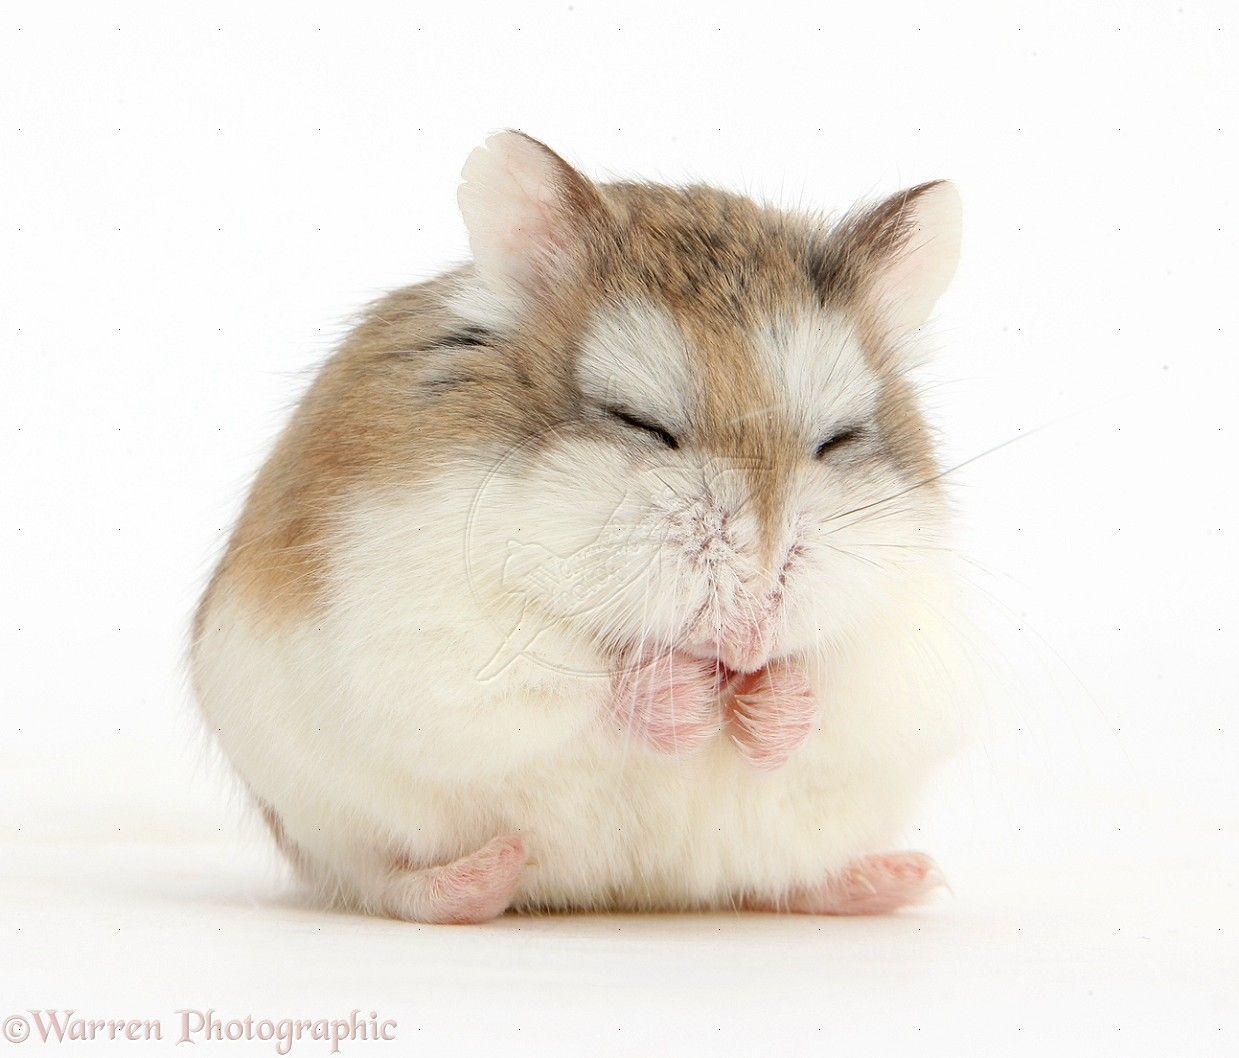 Sleepy Roborovski Hamster (Phodopus roborovskii) pretending